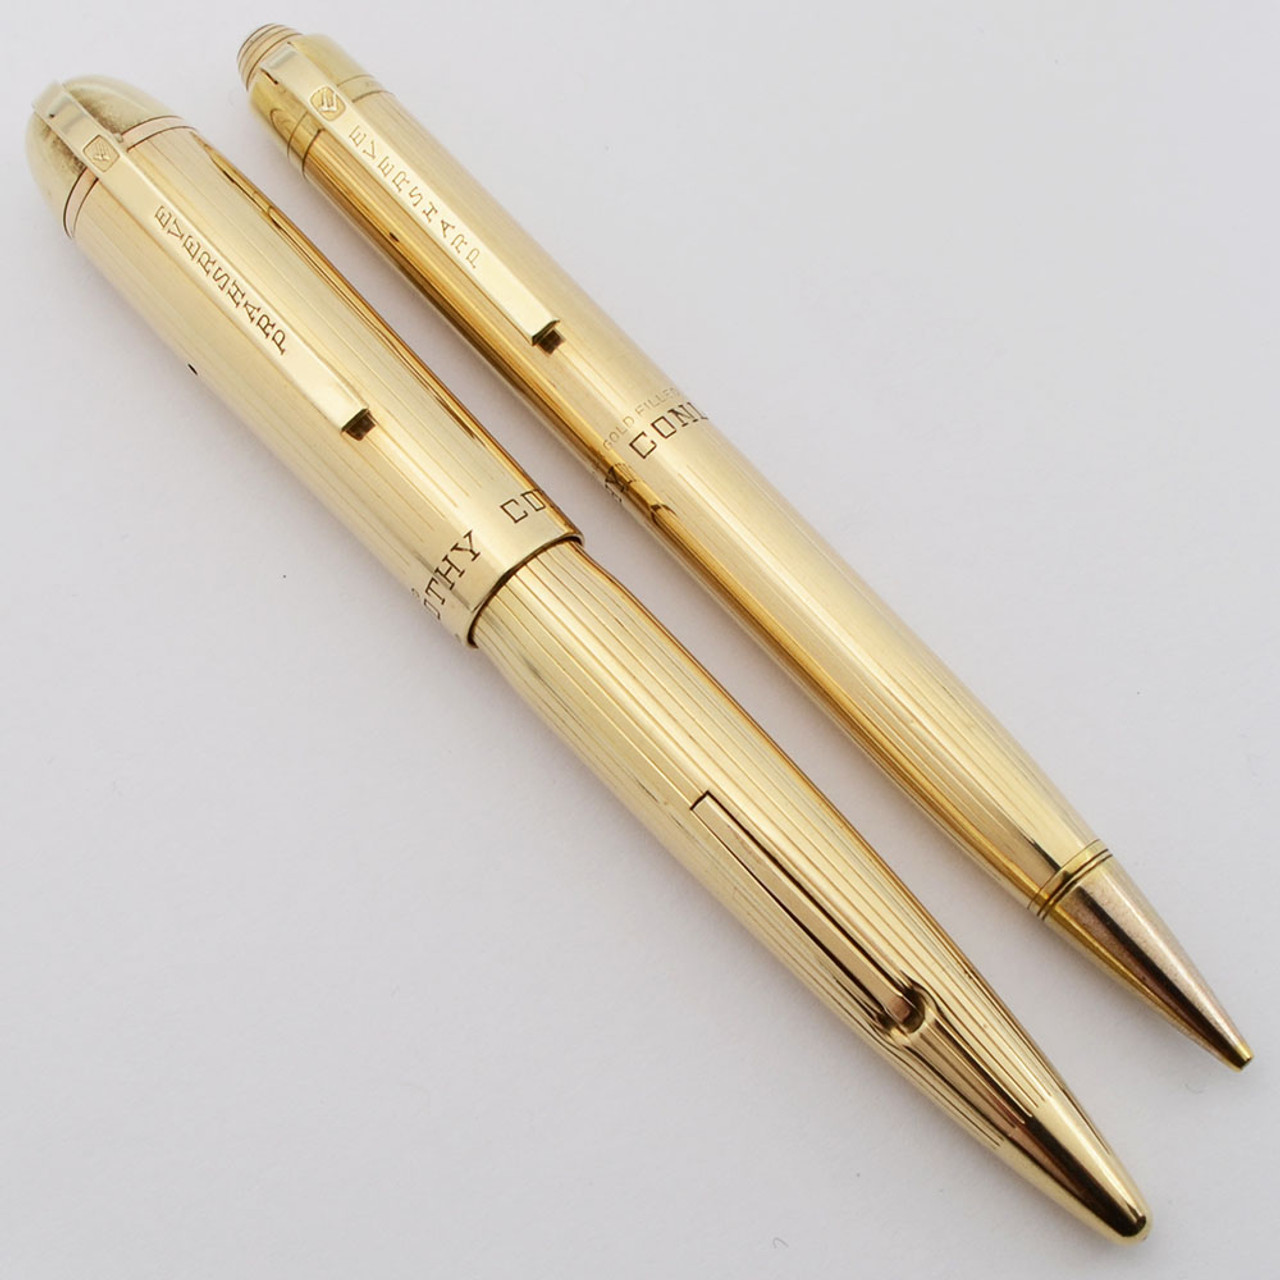 Eversharp Skyline Demi Fountain Pen Set (1940s) - Gold Filled Lined Pattern,  Lever Filler, 14k Left Oblique Nib (Very Nice, Restored)